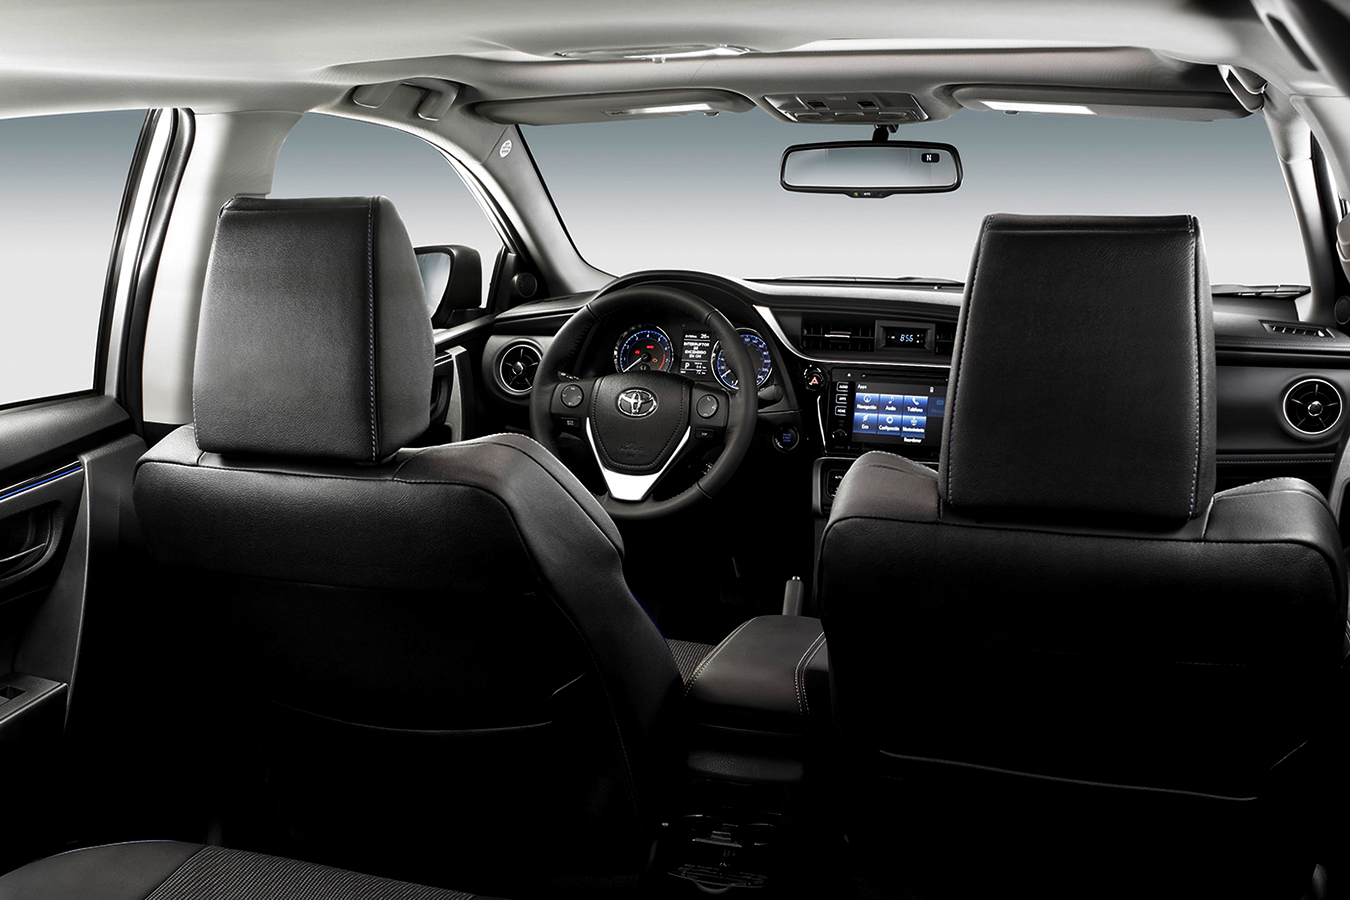 Toyota Corolla 2018 interior